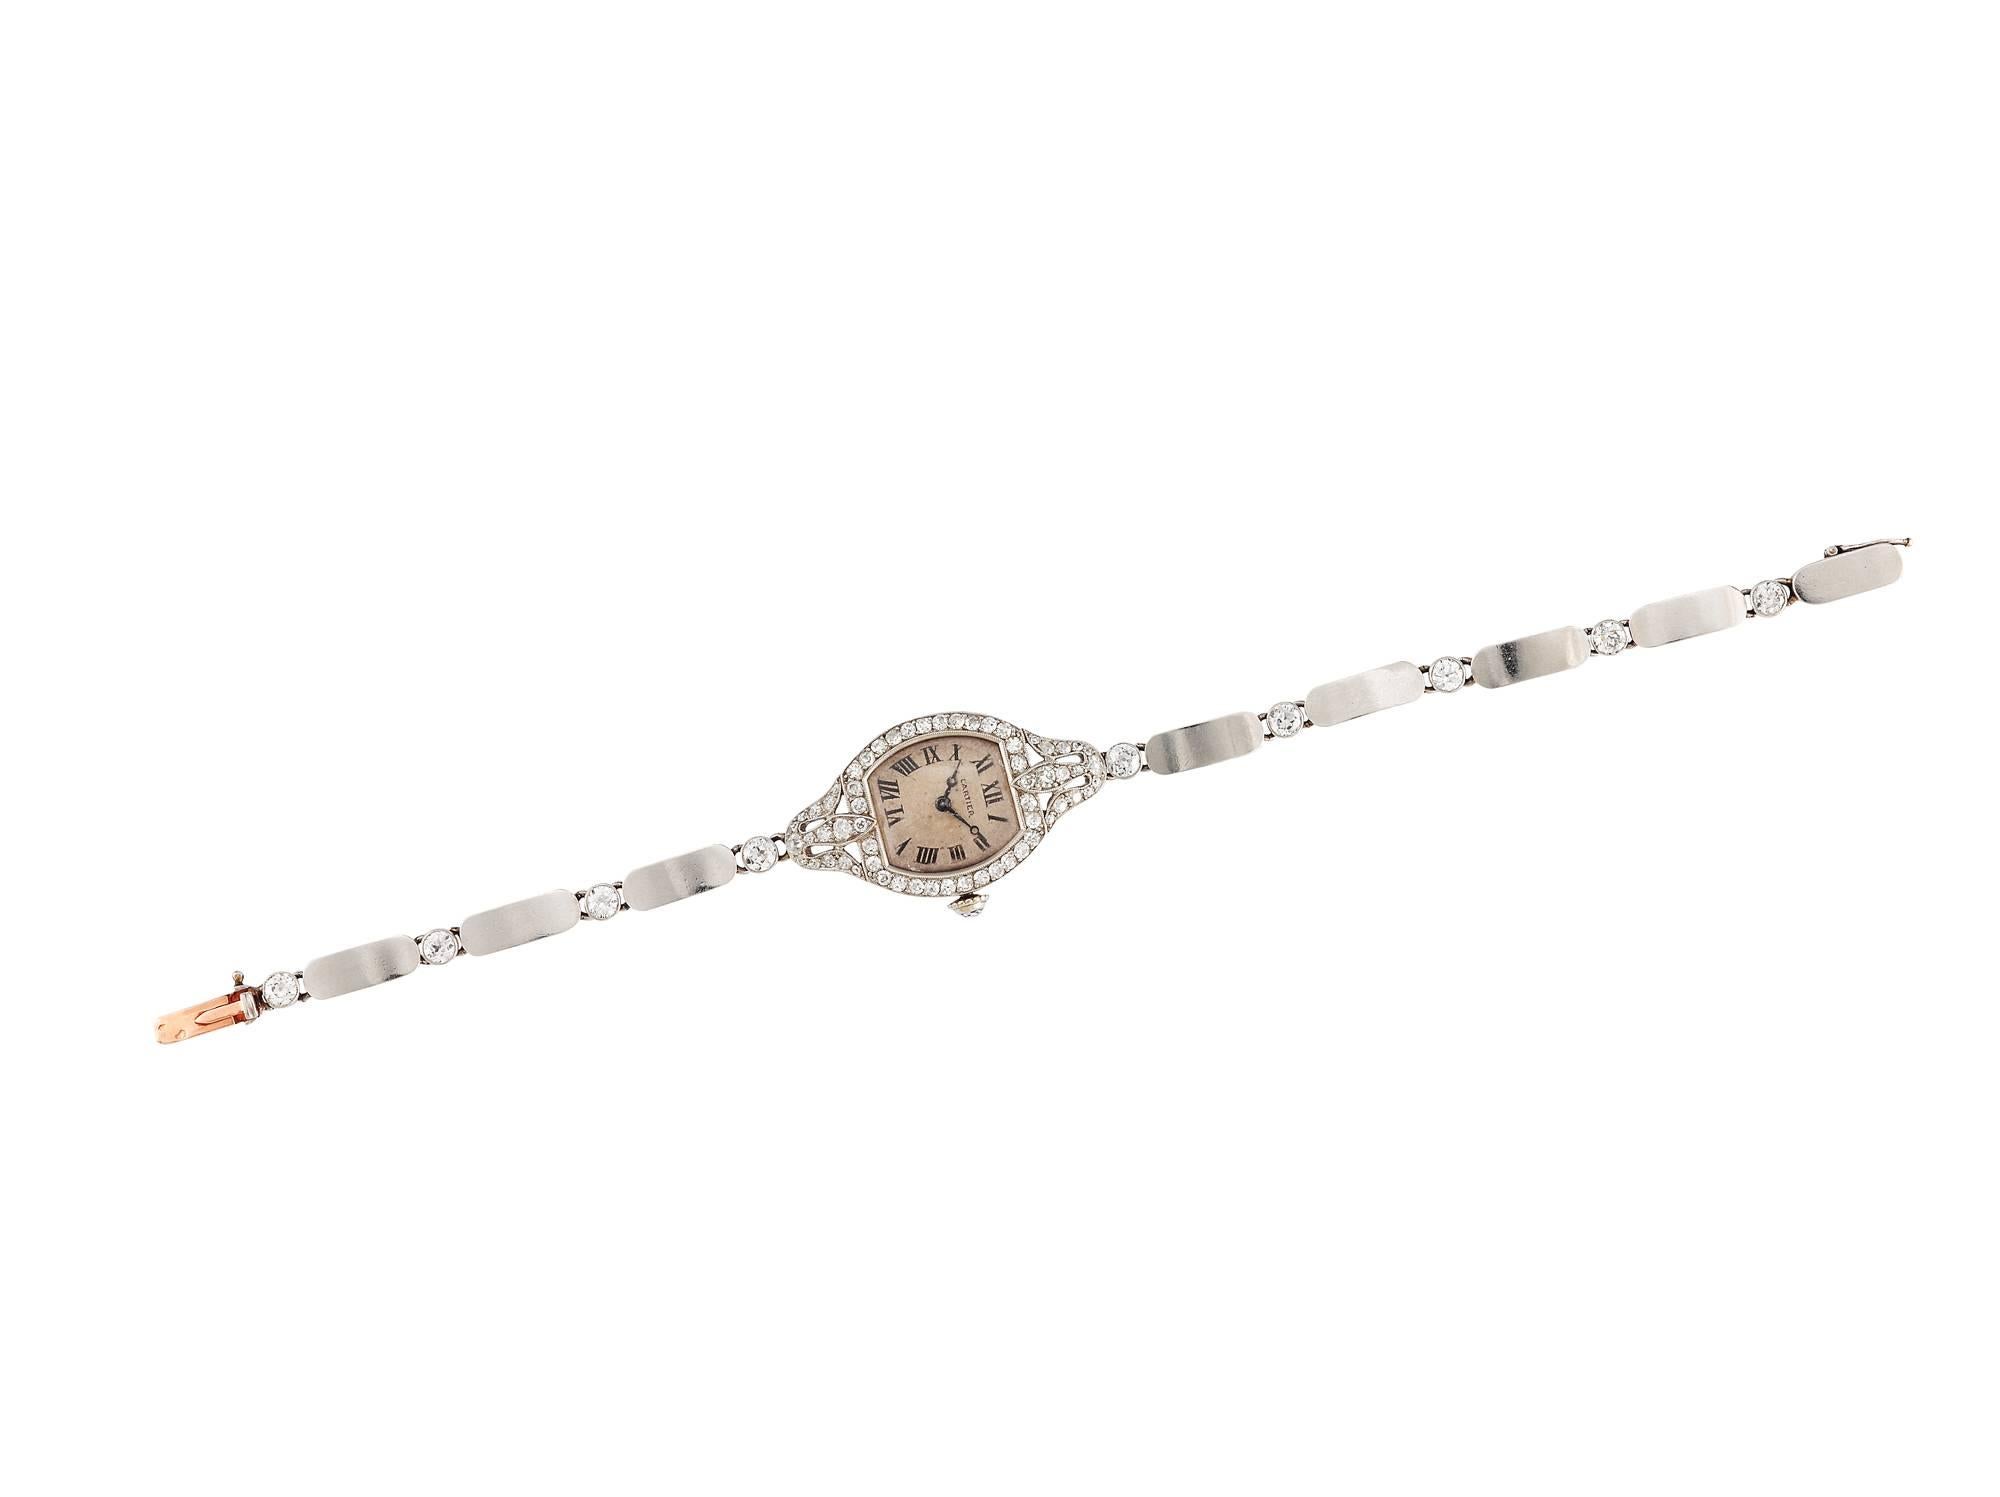 Platinum, 18K Gold, Round cut and Rose cut Diamond Bracelet Watch.
**Diamond Total Weight Approxi. 2.88 Carats.
**Hallmarks: Dog Head